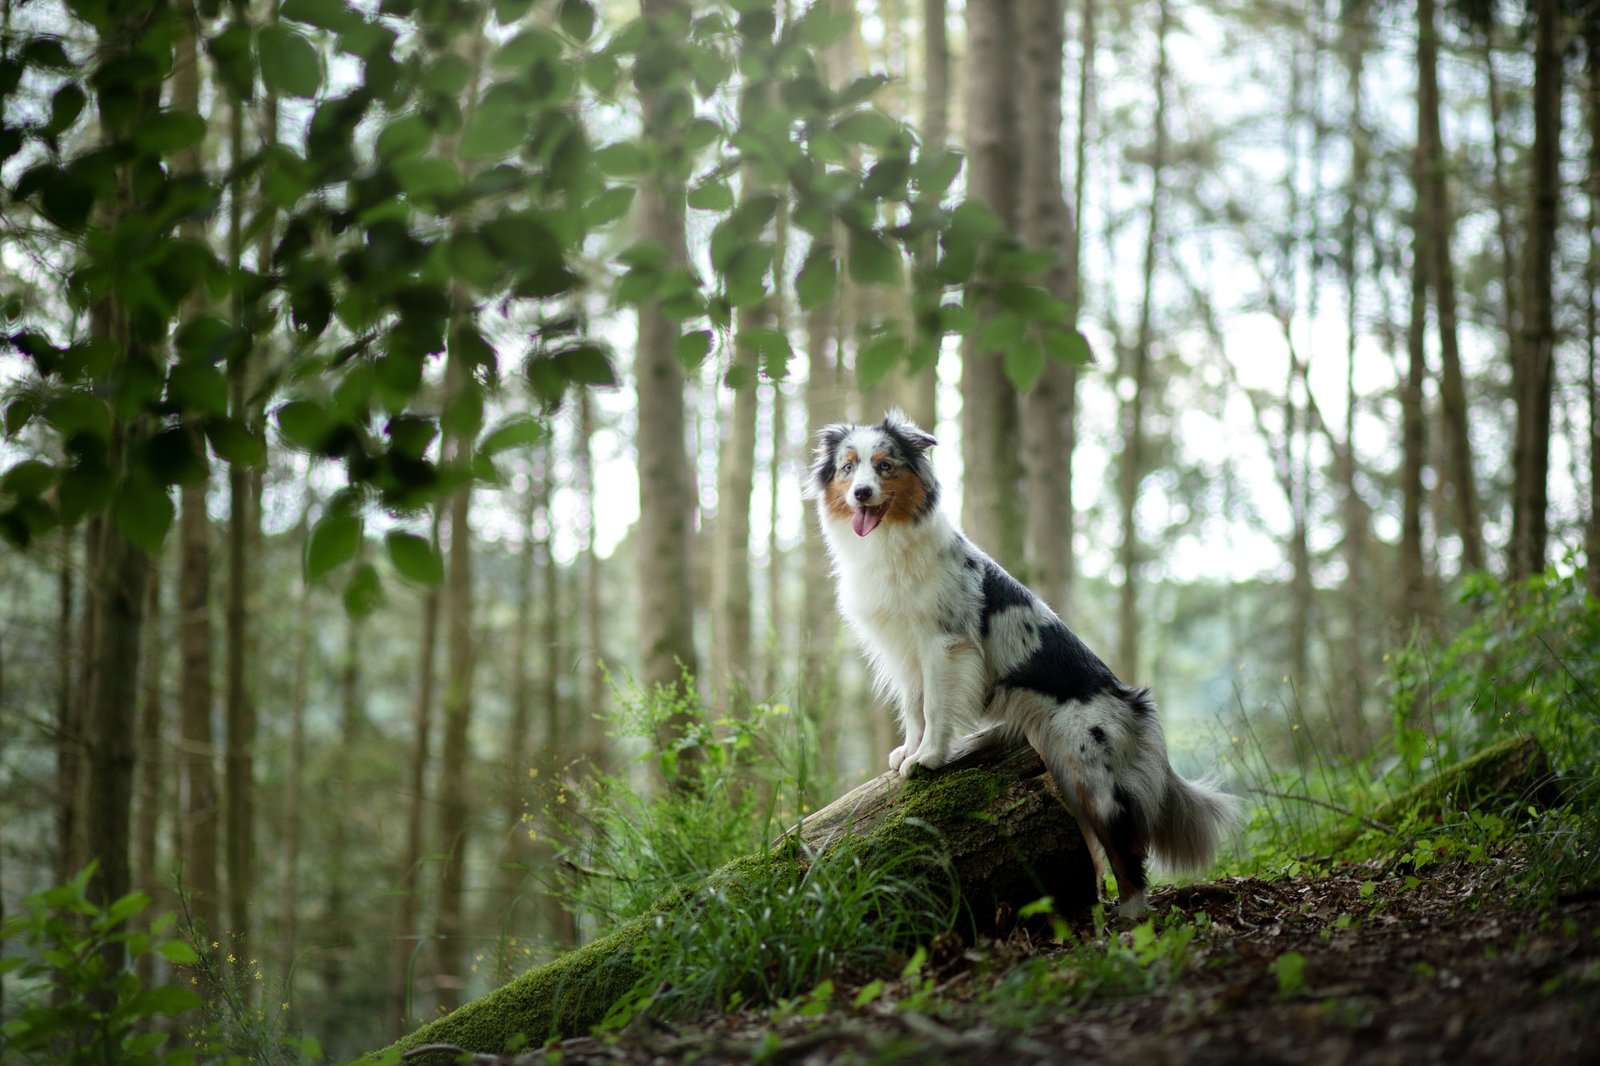 Dog in forest scene